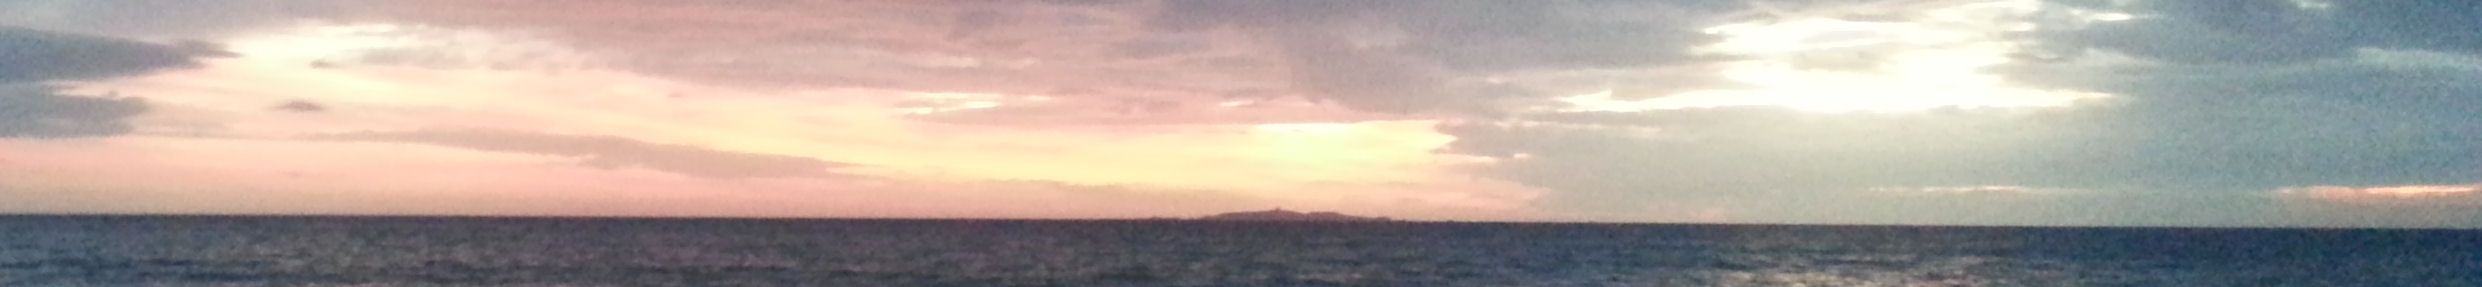 Sunrise over the Isle of May